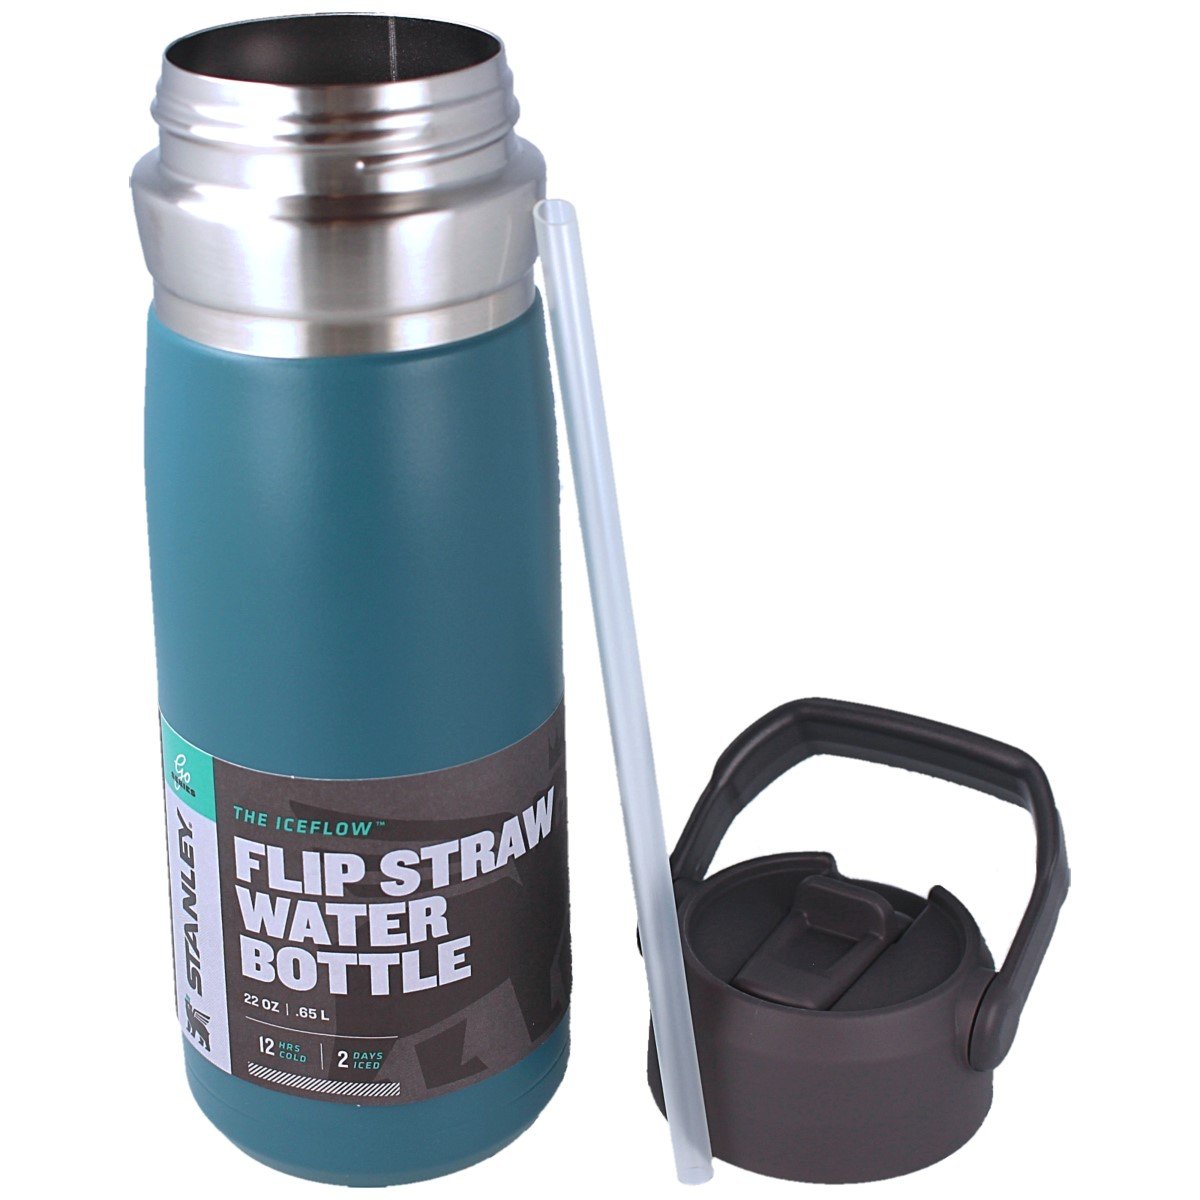 The IceFlow Flip Straw Water Bottle, 22 OZ